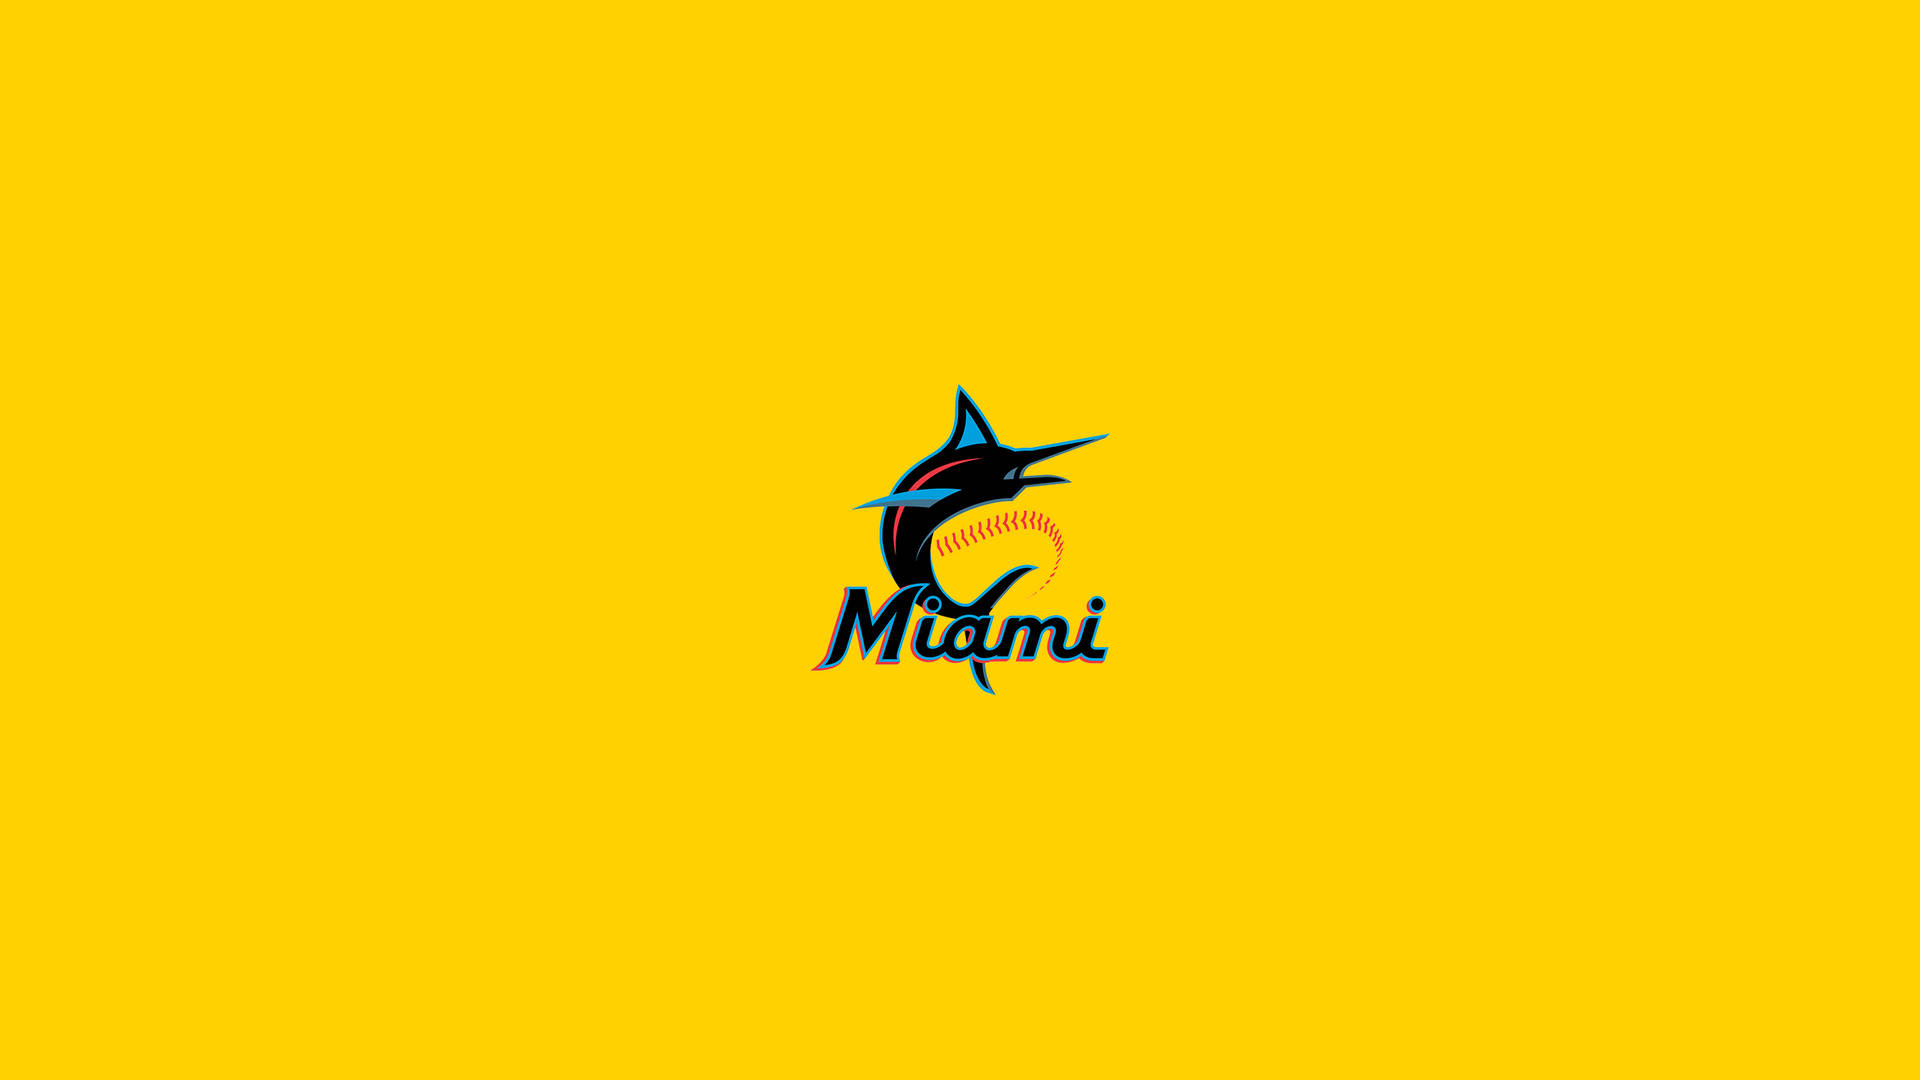 Miami Marlins 2019 Yellow Aesthetic Wallpaper